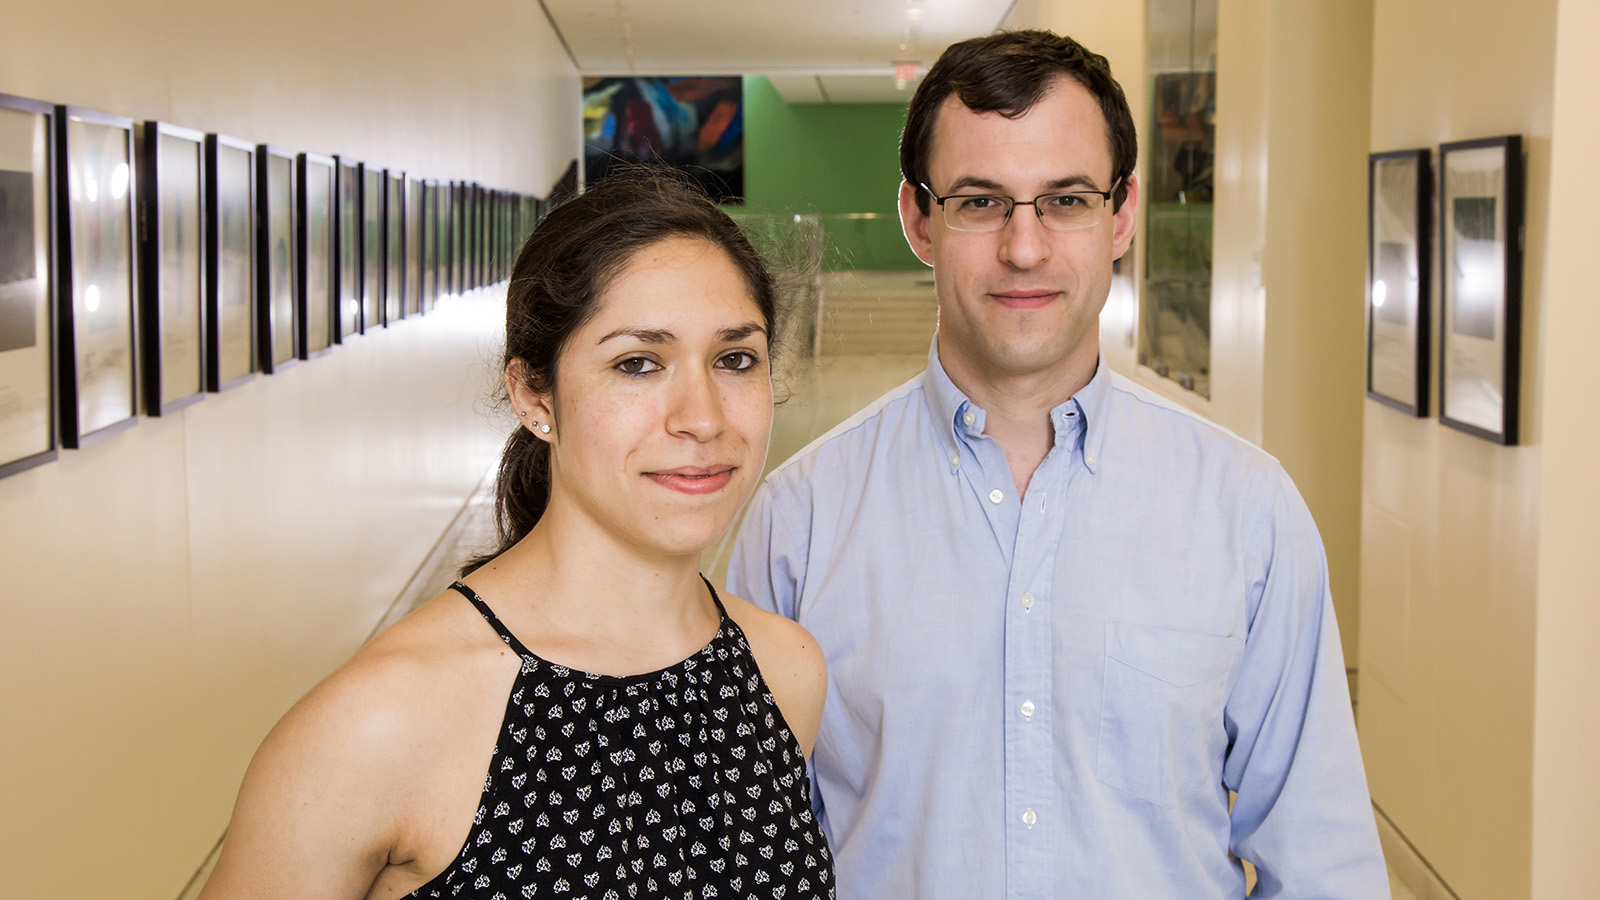 Researchers Marcela Melara and Michael Freedman stand in hallway